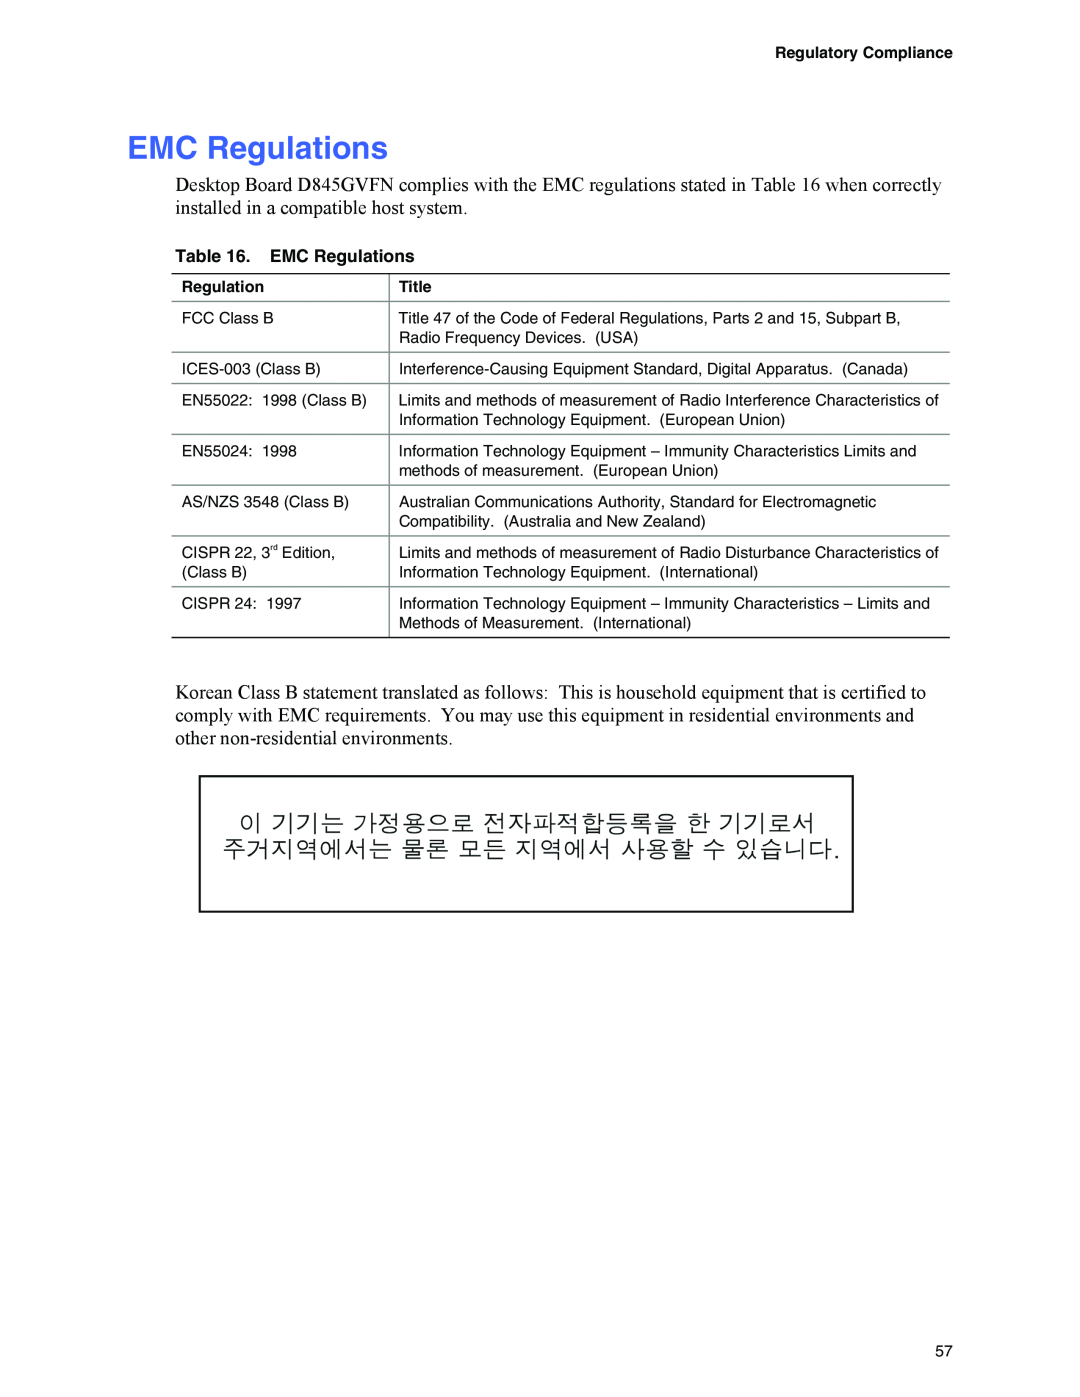 Intel D845GVFN manual EMC Regulations 